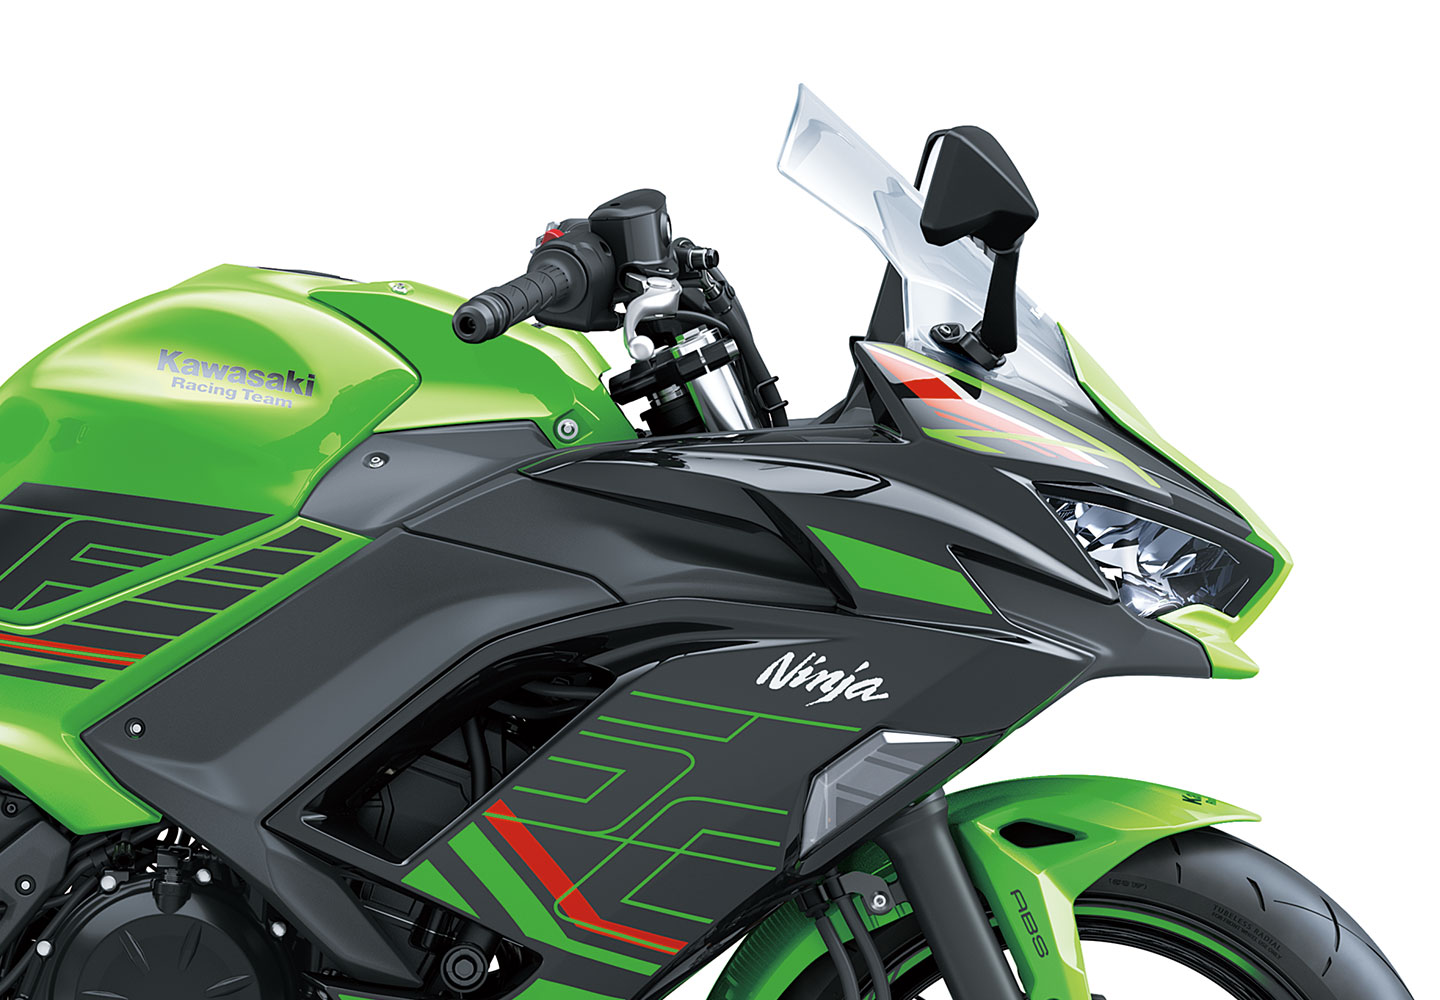 Kawasaki Ninja 650 | Sport Motorcycle | Nimble & Sporty